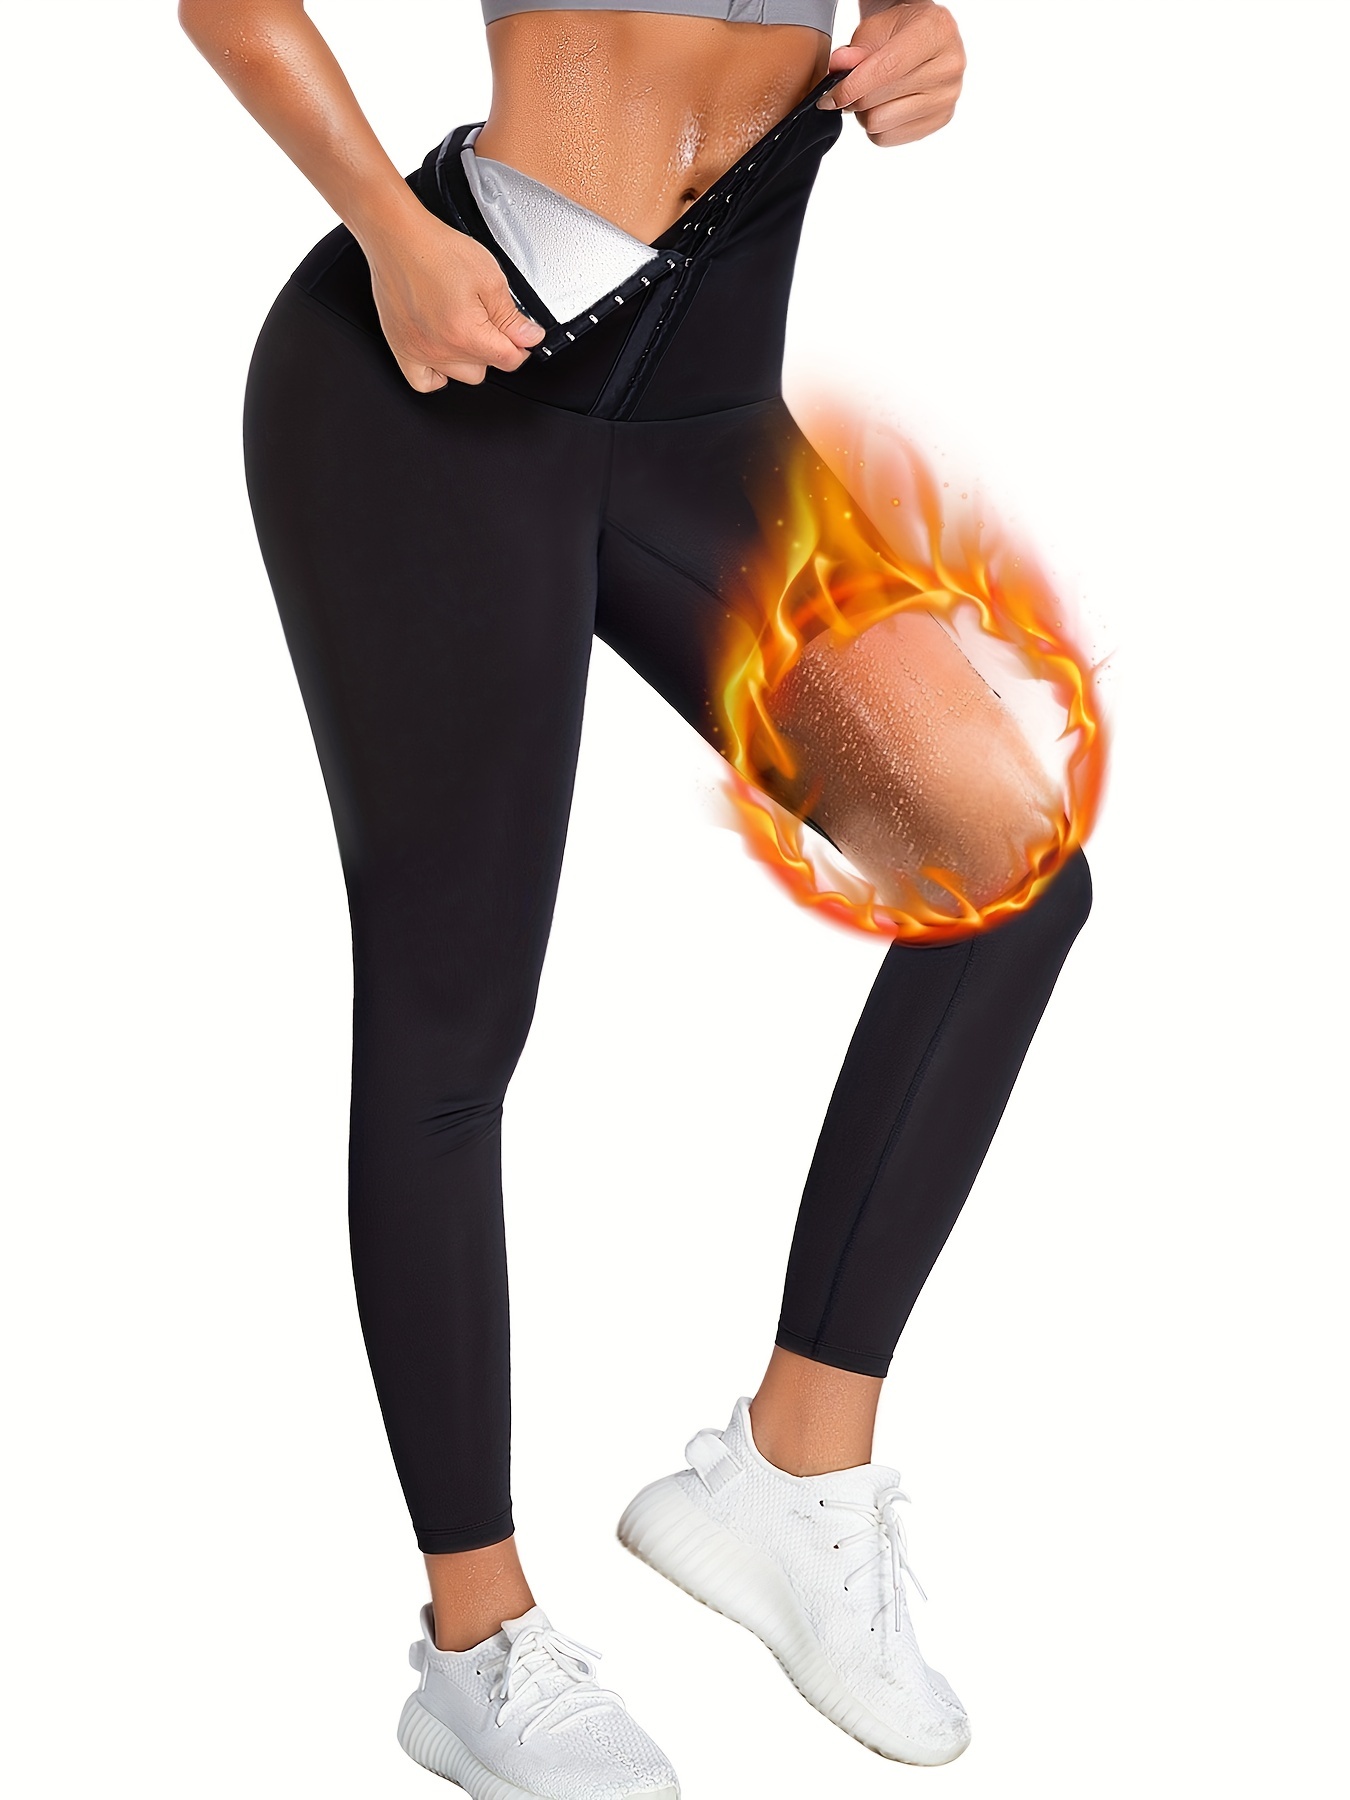 KUMAYES Sauna Leggings for Women Sweat Pants High Waist Compression  Slimming Hot Thermo Workout Training Capris Body Shaper Black X-Large